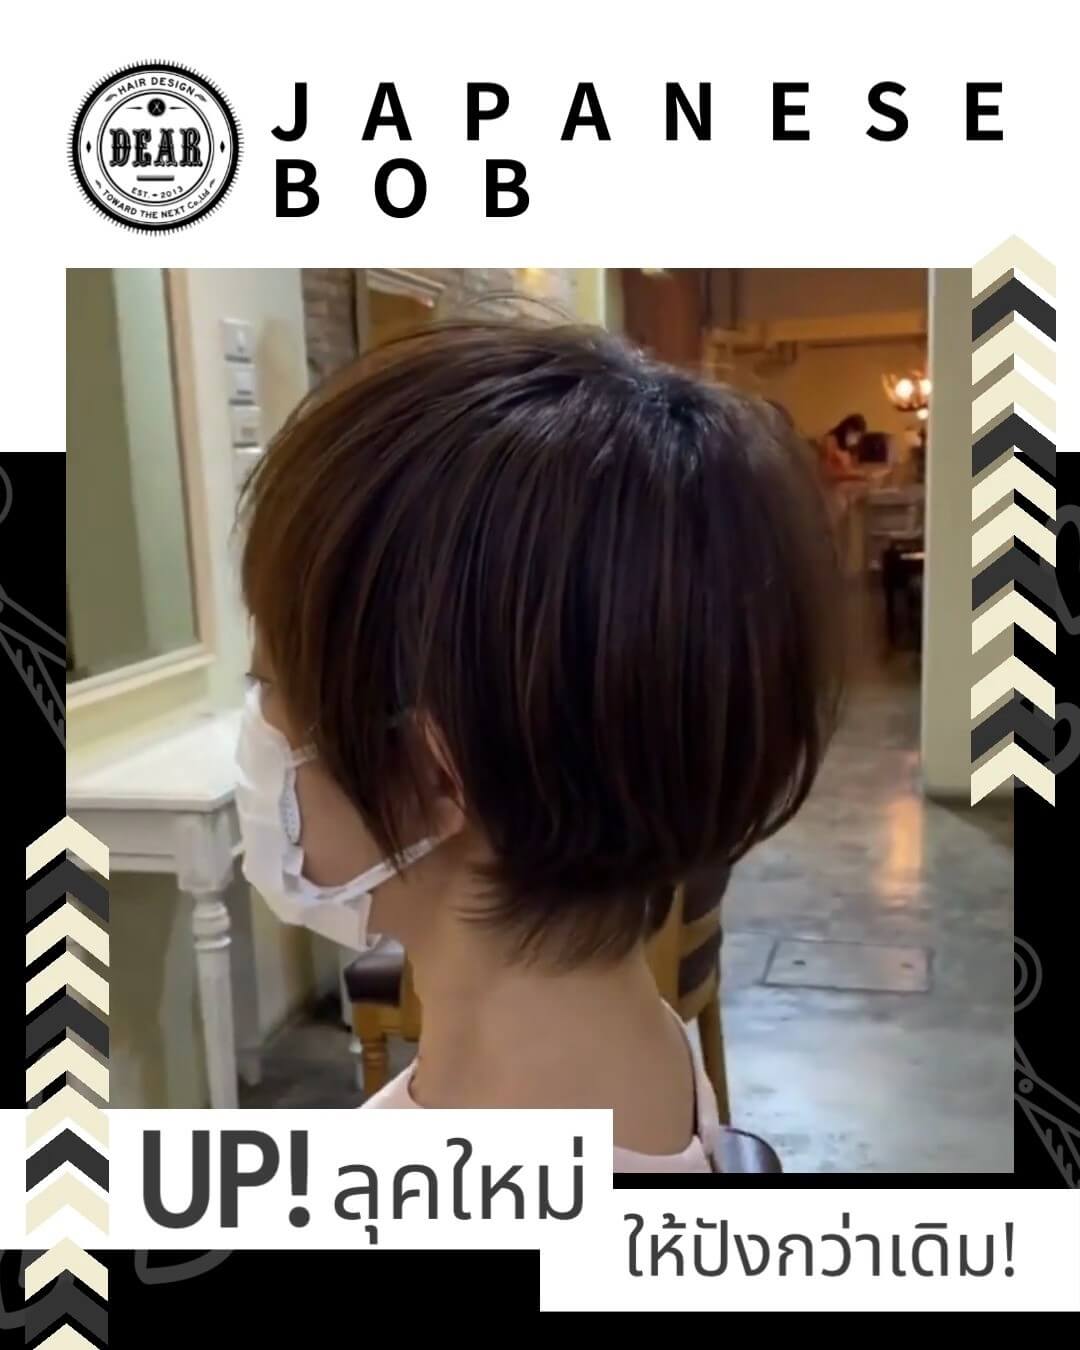 ekiBlog.com: Hair & beauty July 2010 mag scan featuring Lena Fujii